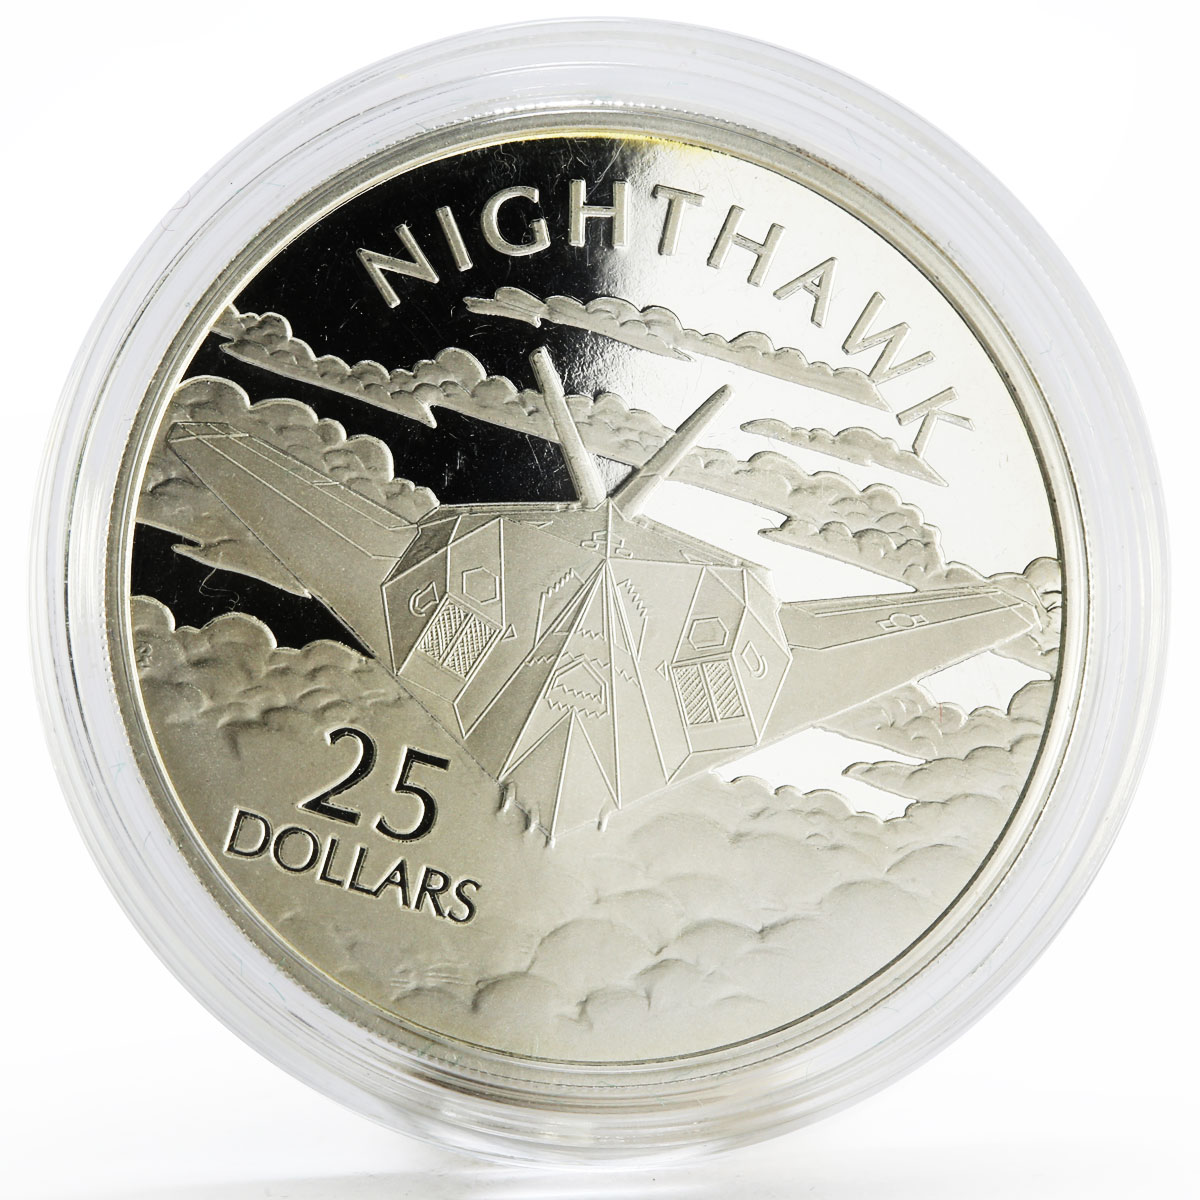 Solomon Islands 25 dollars Aircraft series F-117 Nighthawk silver coin 2003